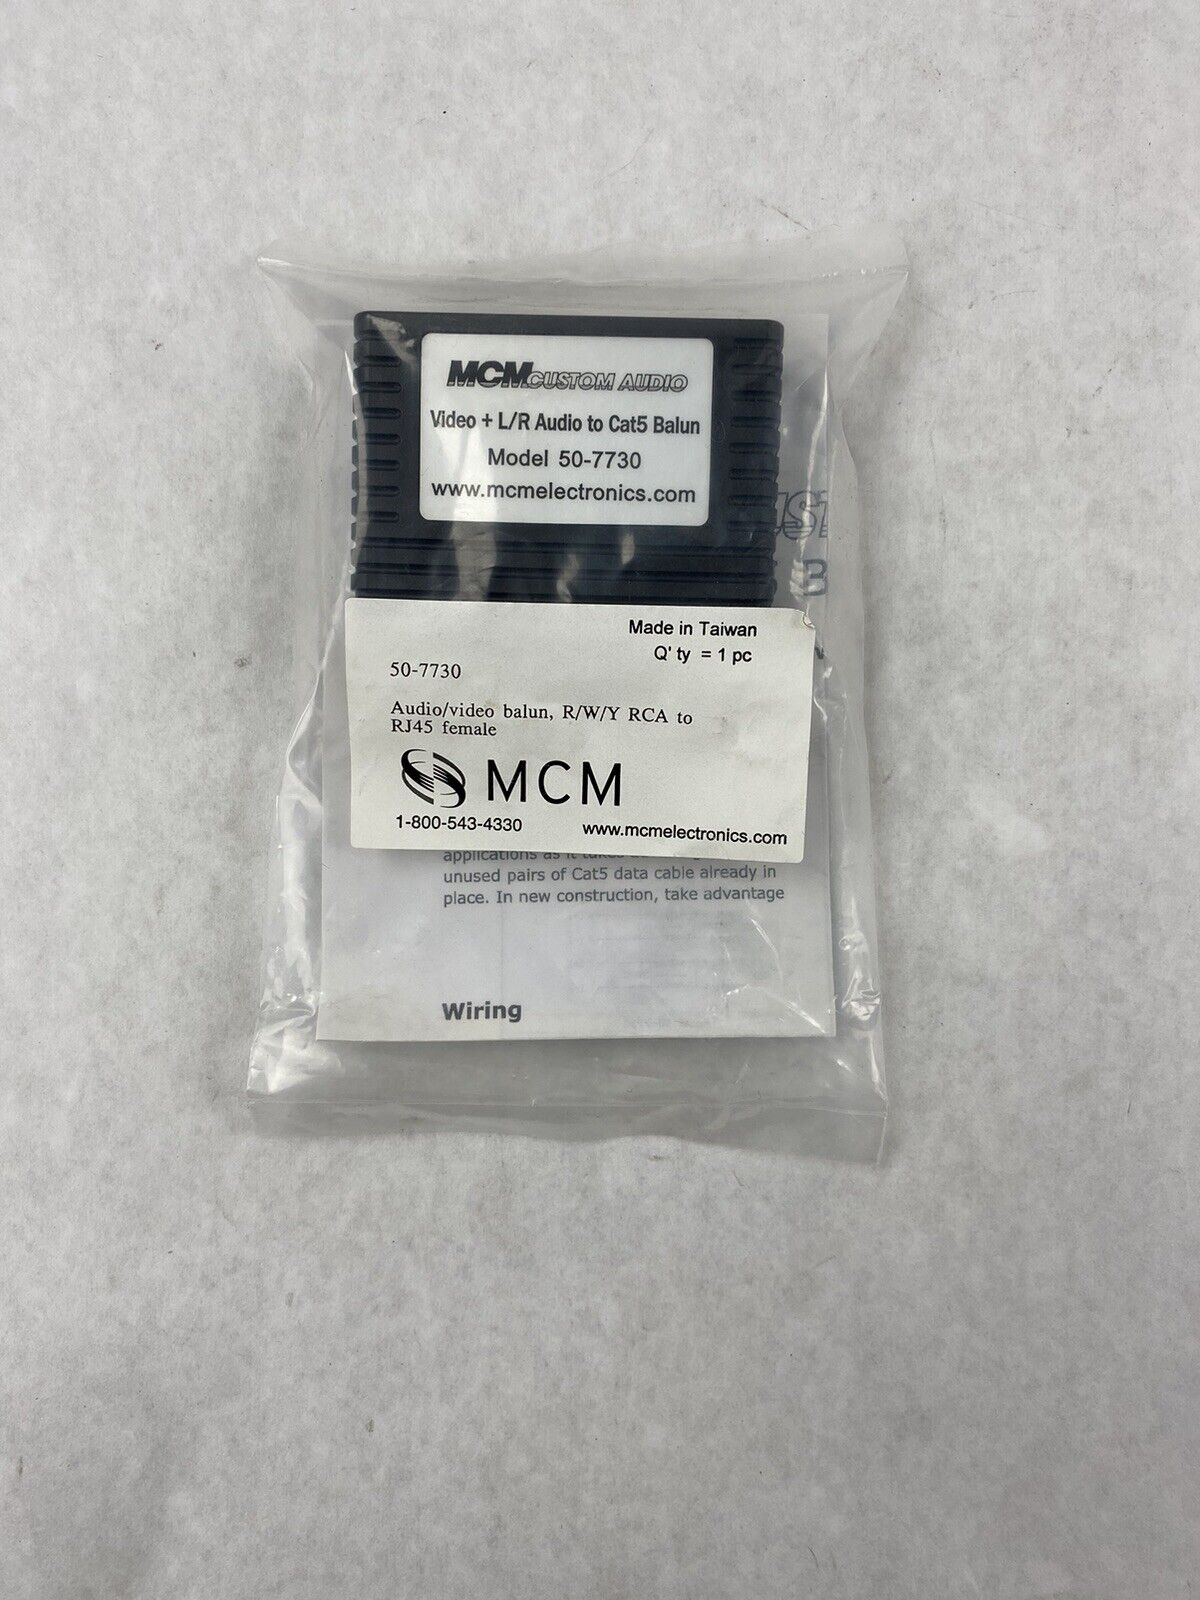 MCM Custom Audio 50-7730 Audio/Video Balun